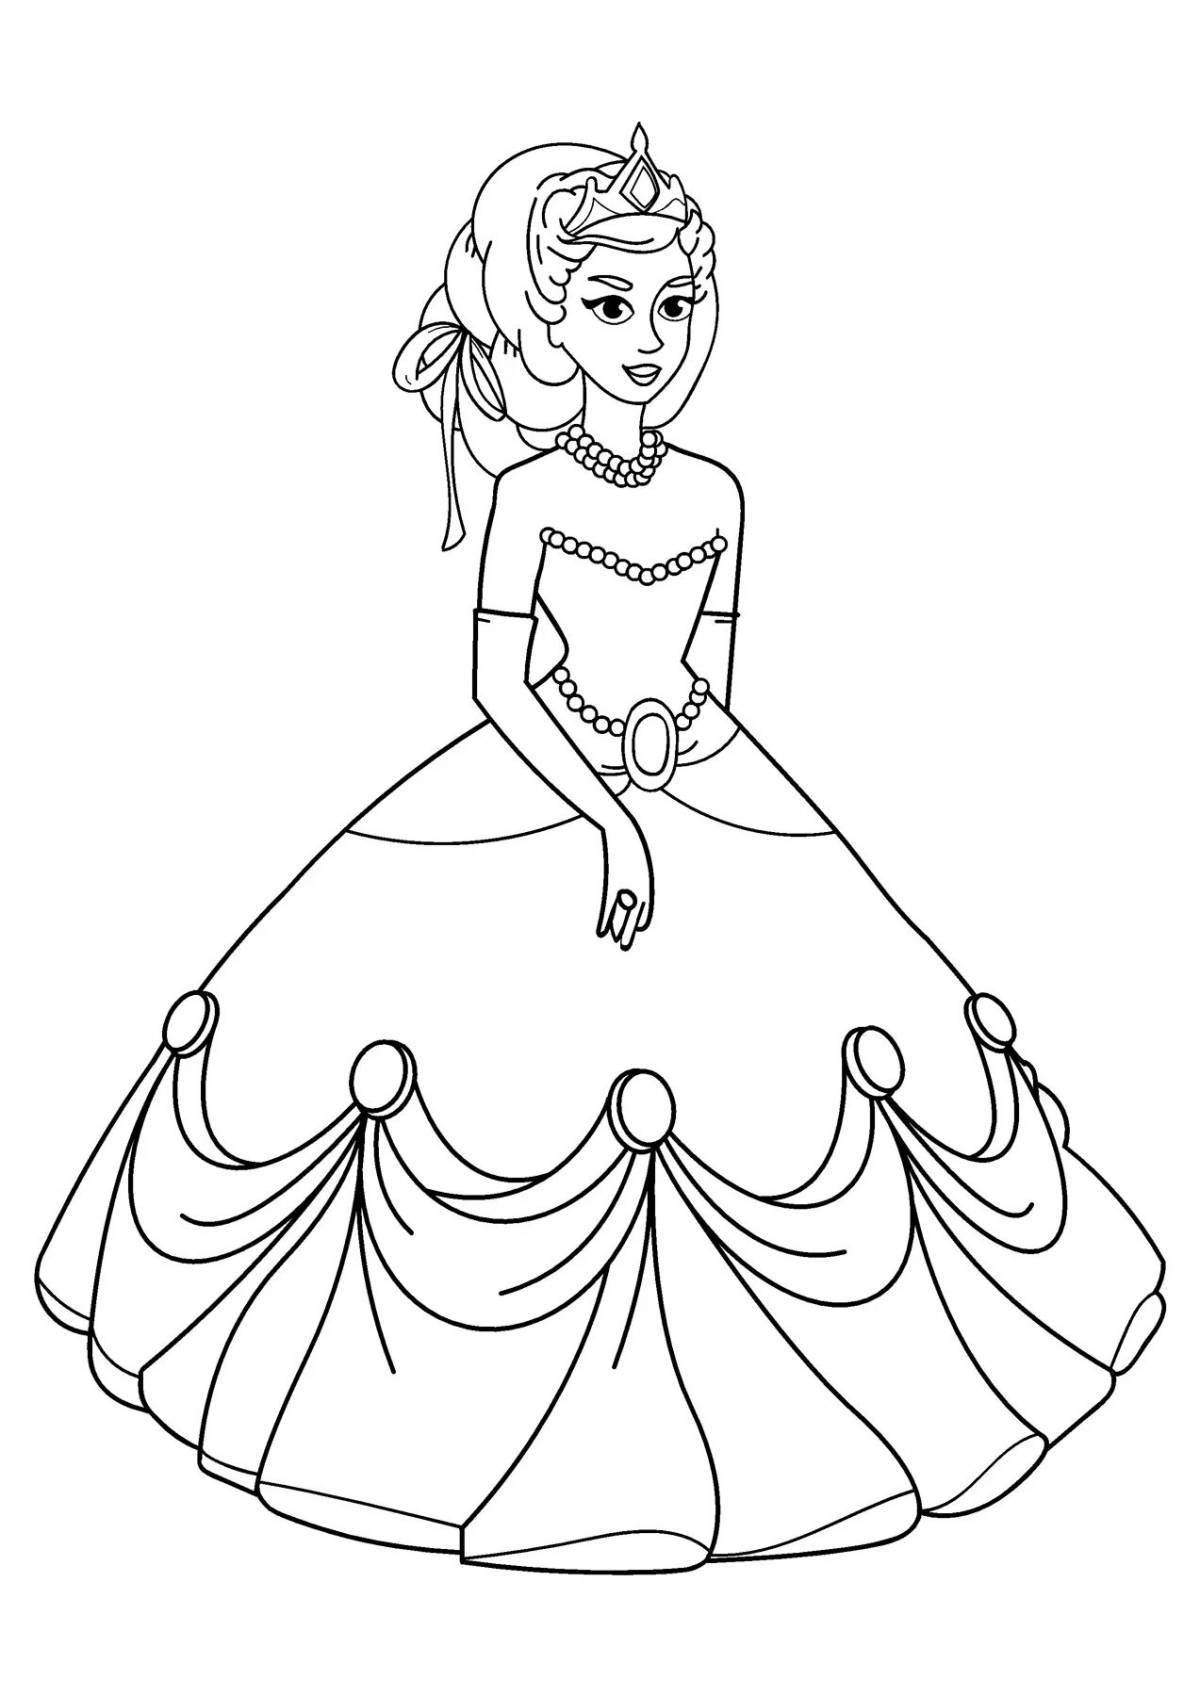 Fancy princess coloring pages